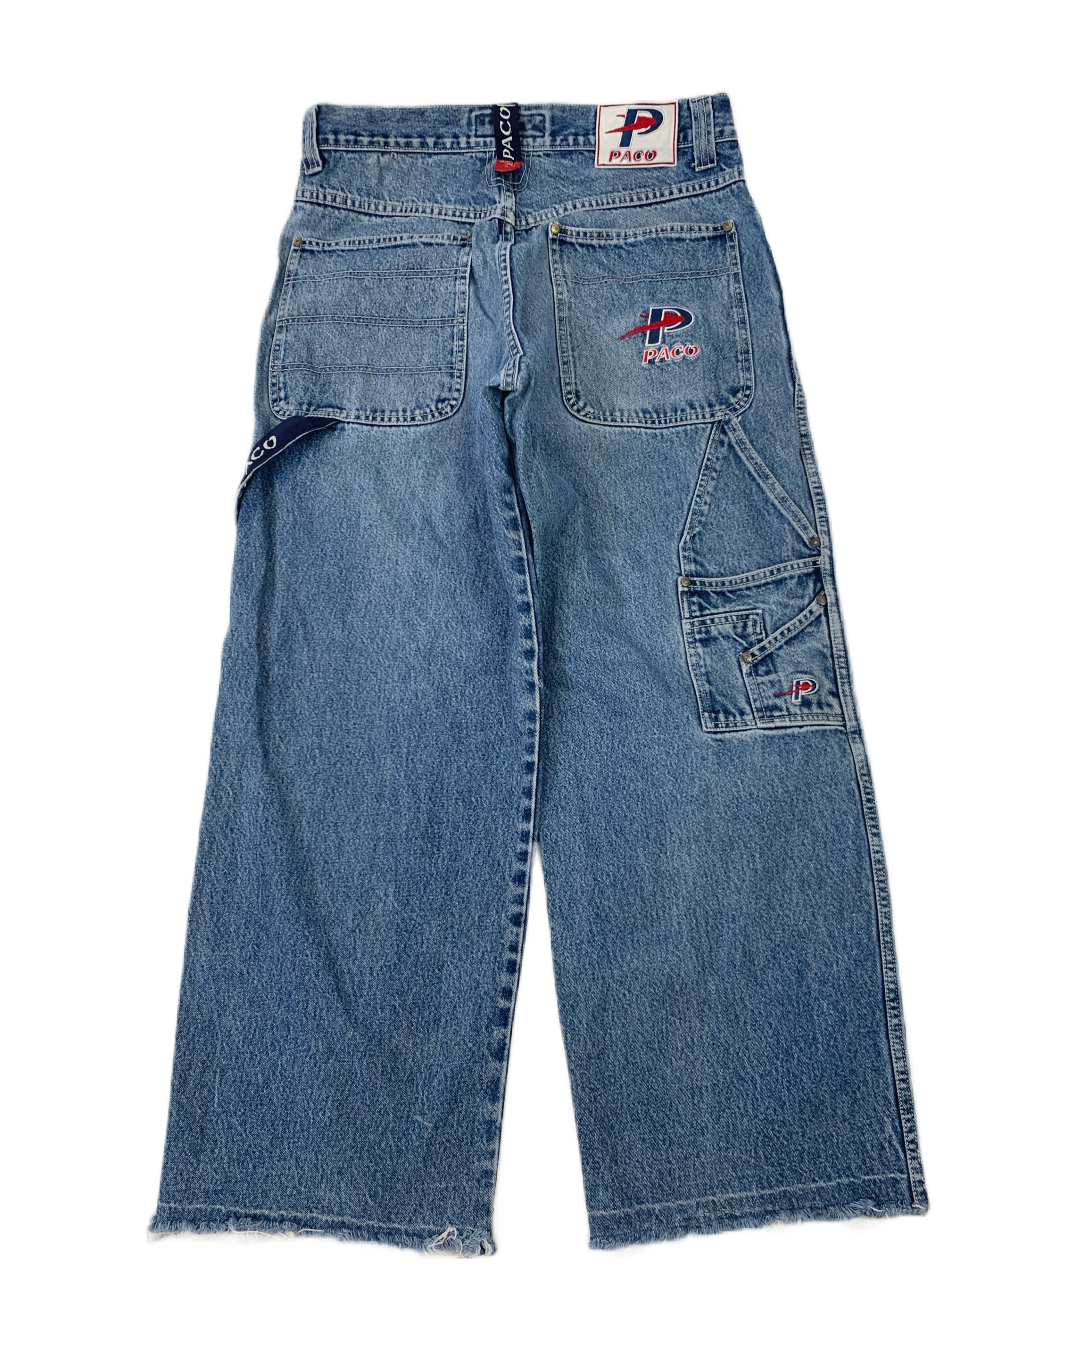 Paco Sport Carpenter Vintage Jeans - 34